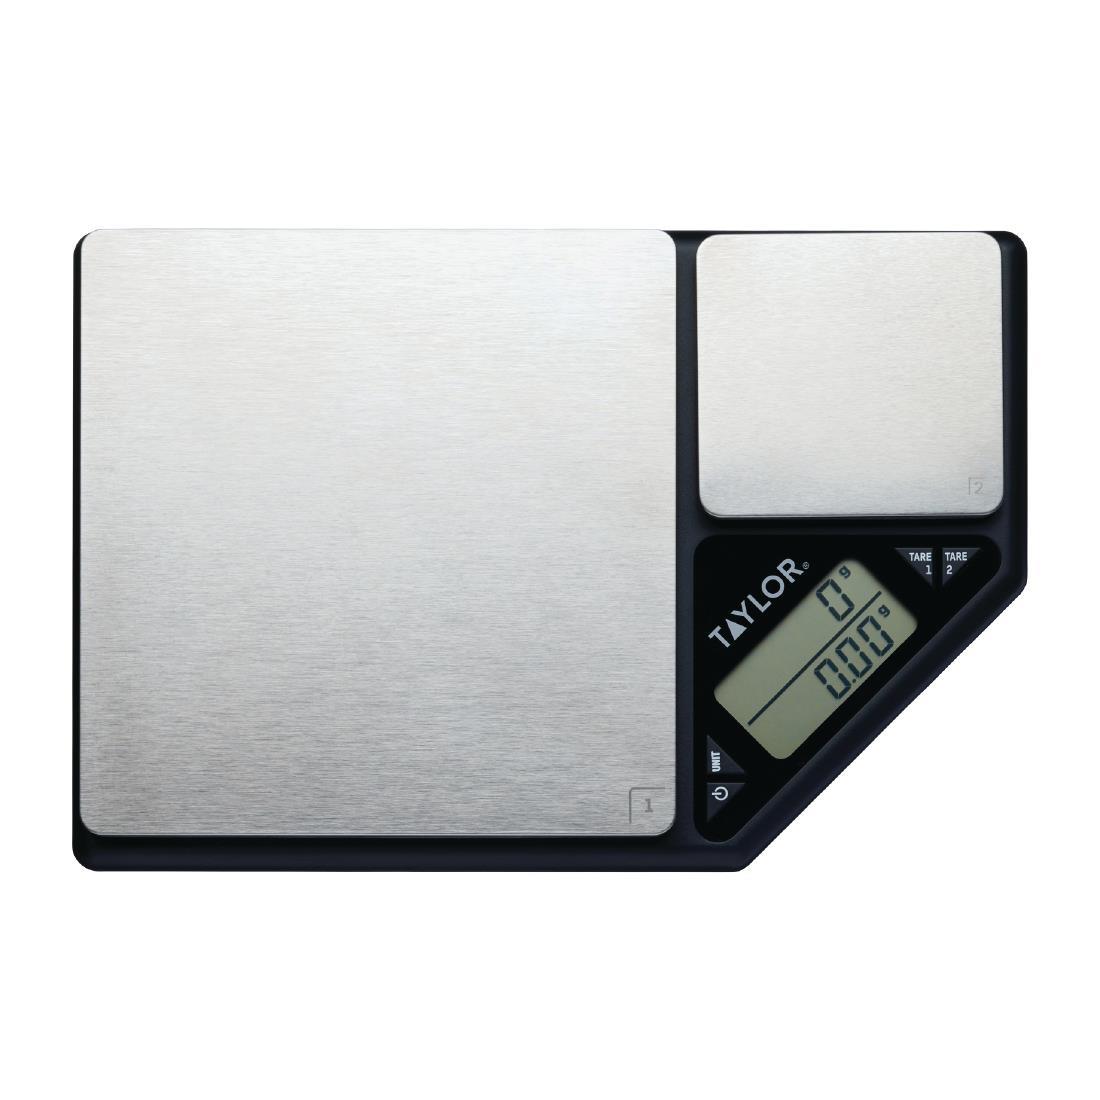 FS591 - TYPSCALE5DP - Taylor Pro Dual Platform Digital Kitchen Scale  5kg/500g - FS591